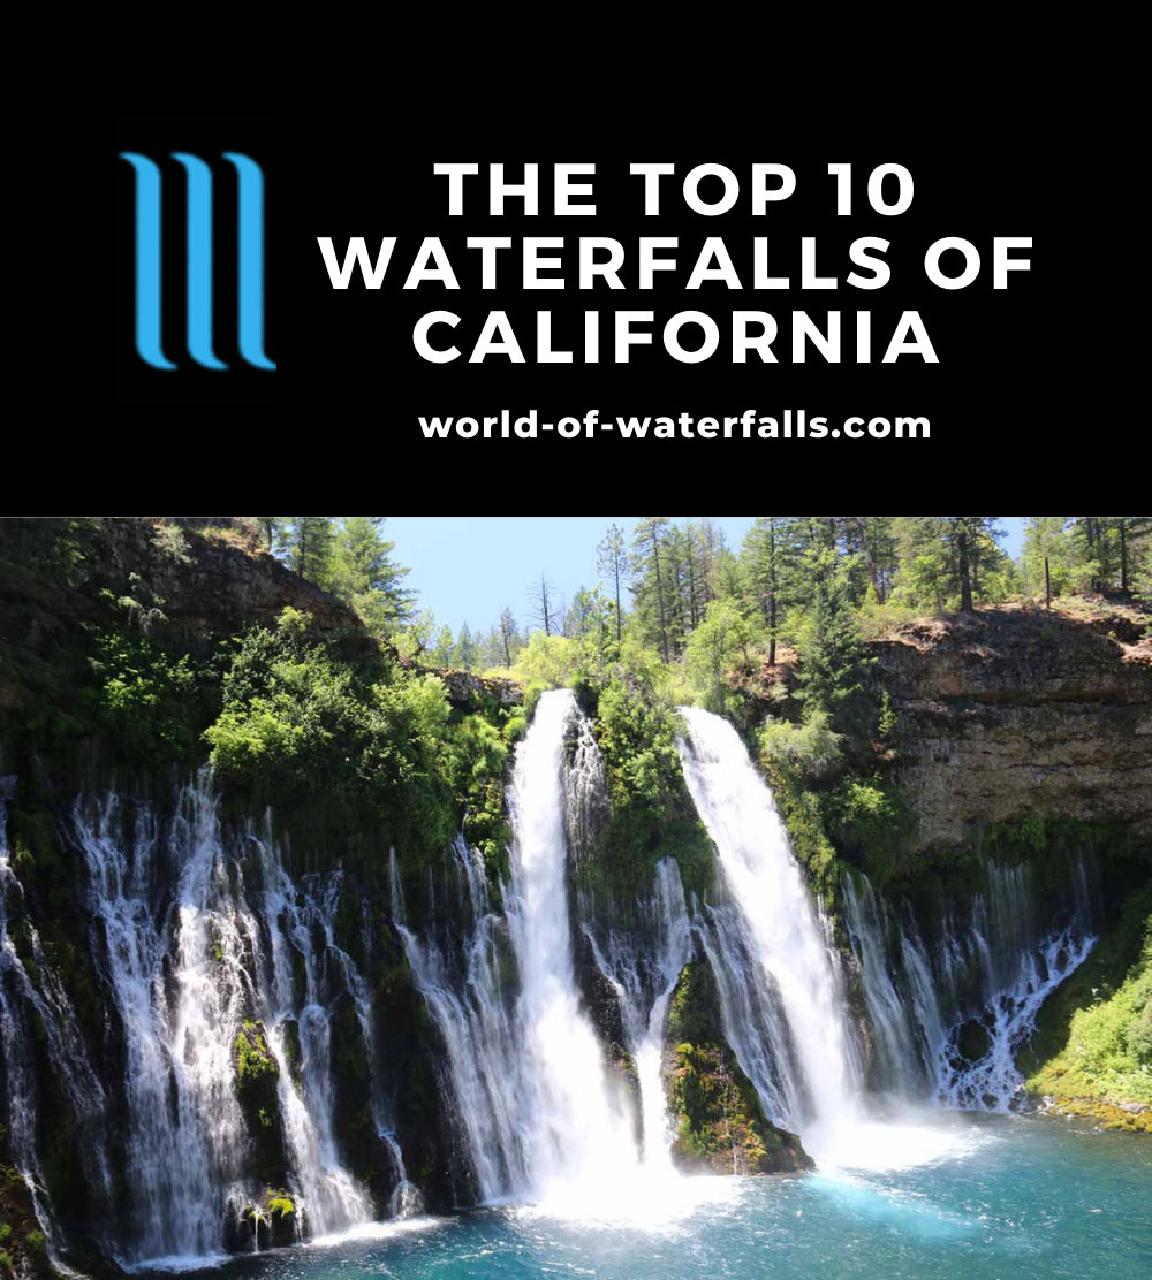 The Top 10 Waterfalls of California